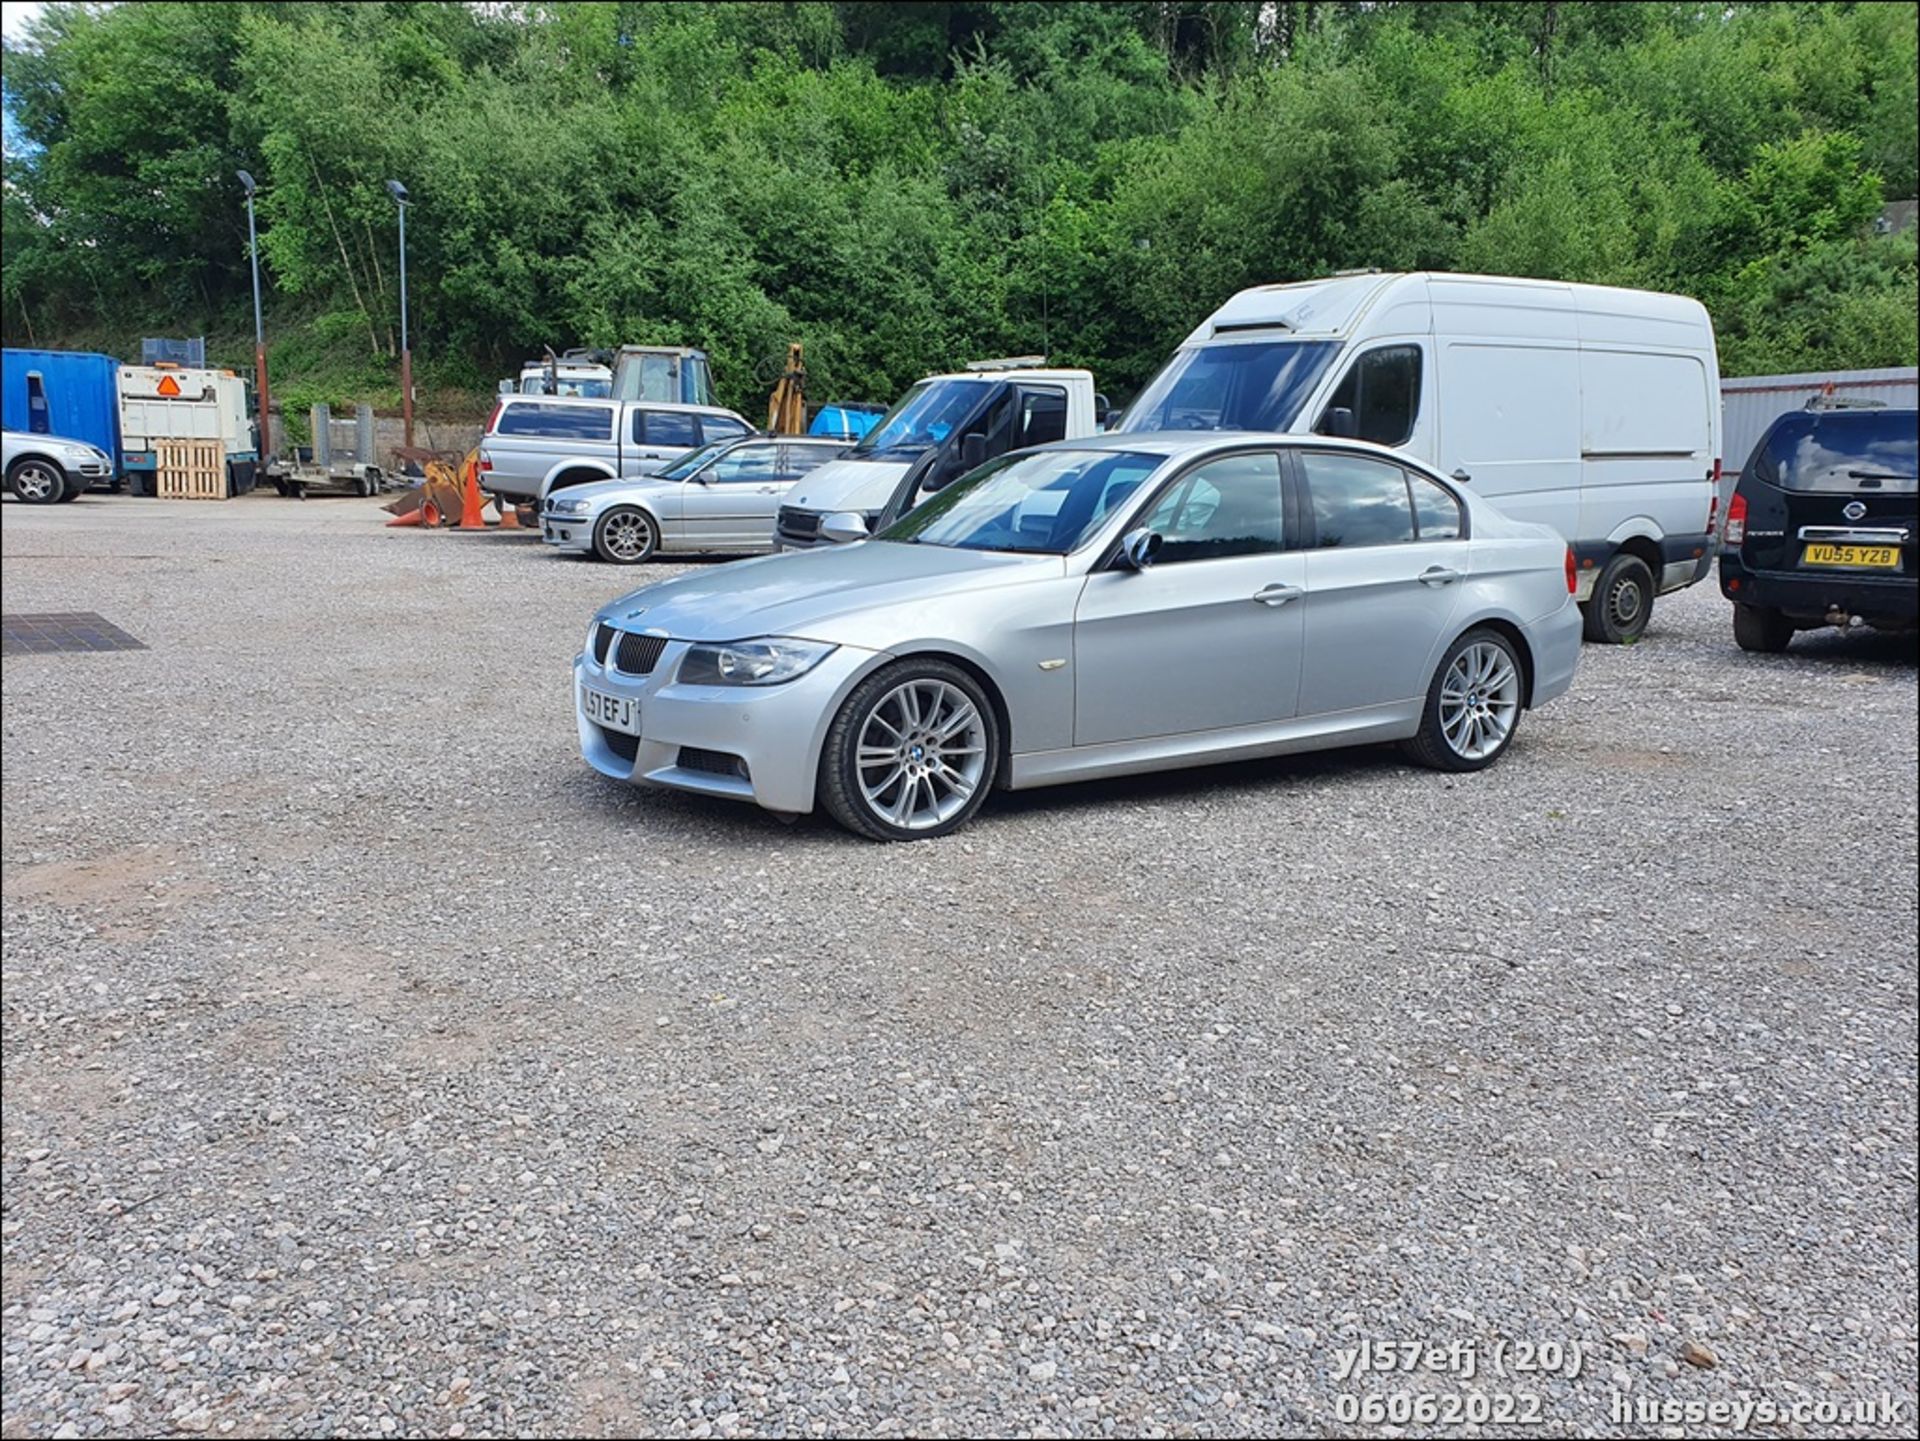 08/57 BMW 330D M SPORT AUTO - 2993cc 4dr Saloon (Silver) - Image 20 of 39